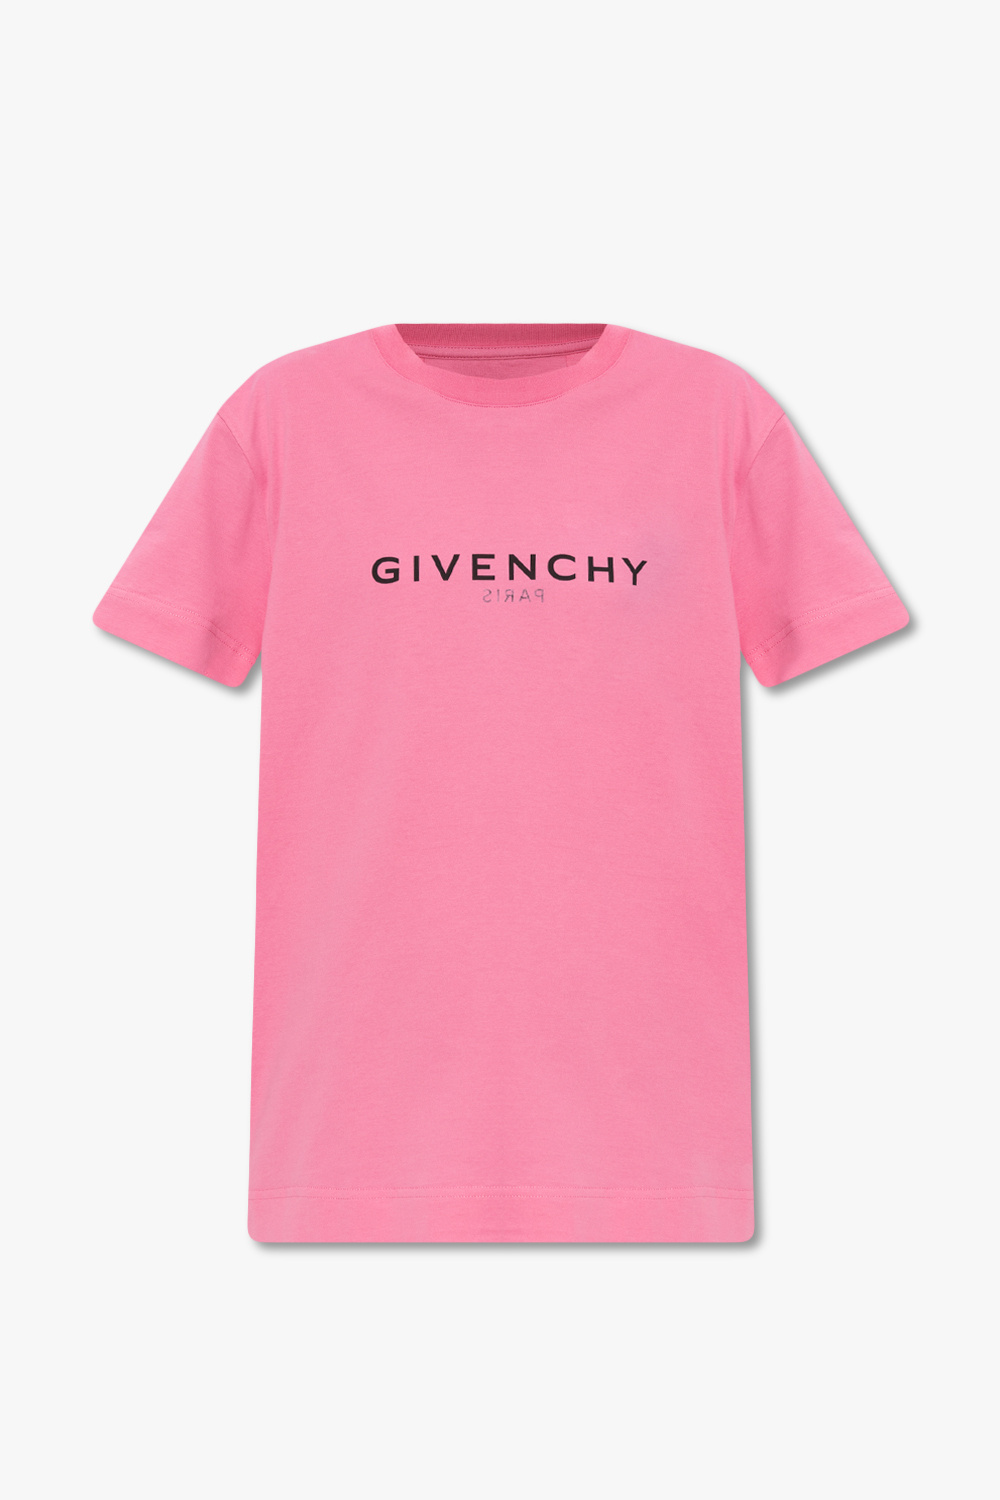 Givenchy Printed T-shirt | Women's Clothing | Vitkac